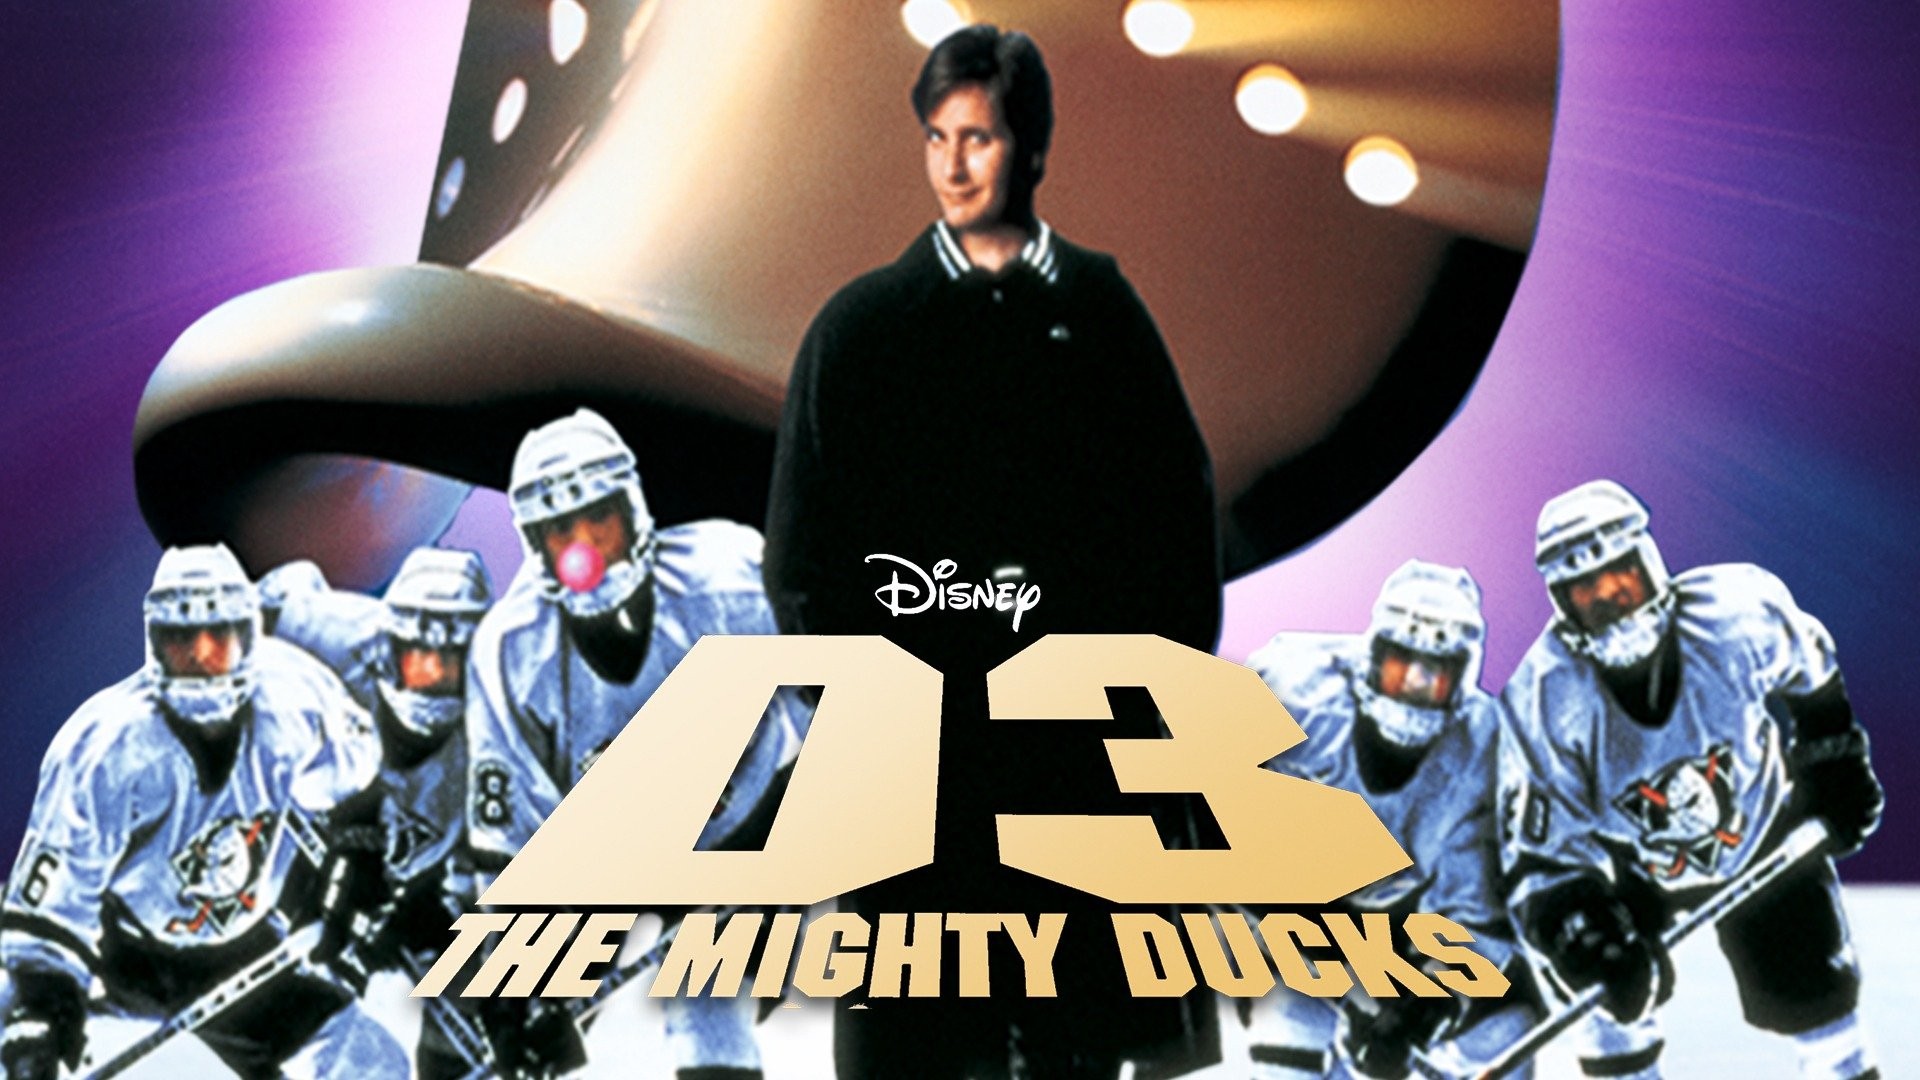 D3: The Mighty Ducks - Film